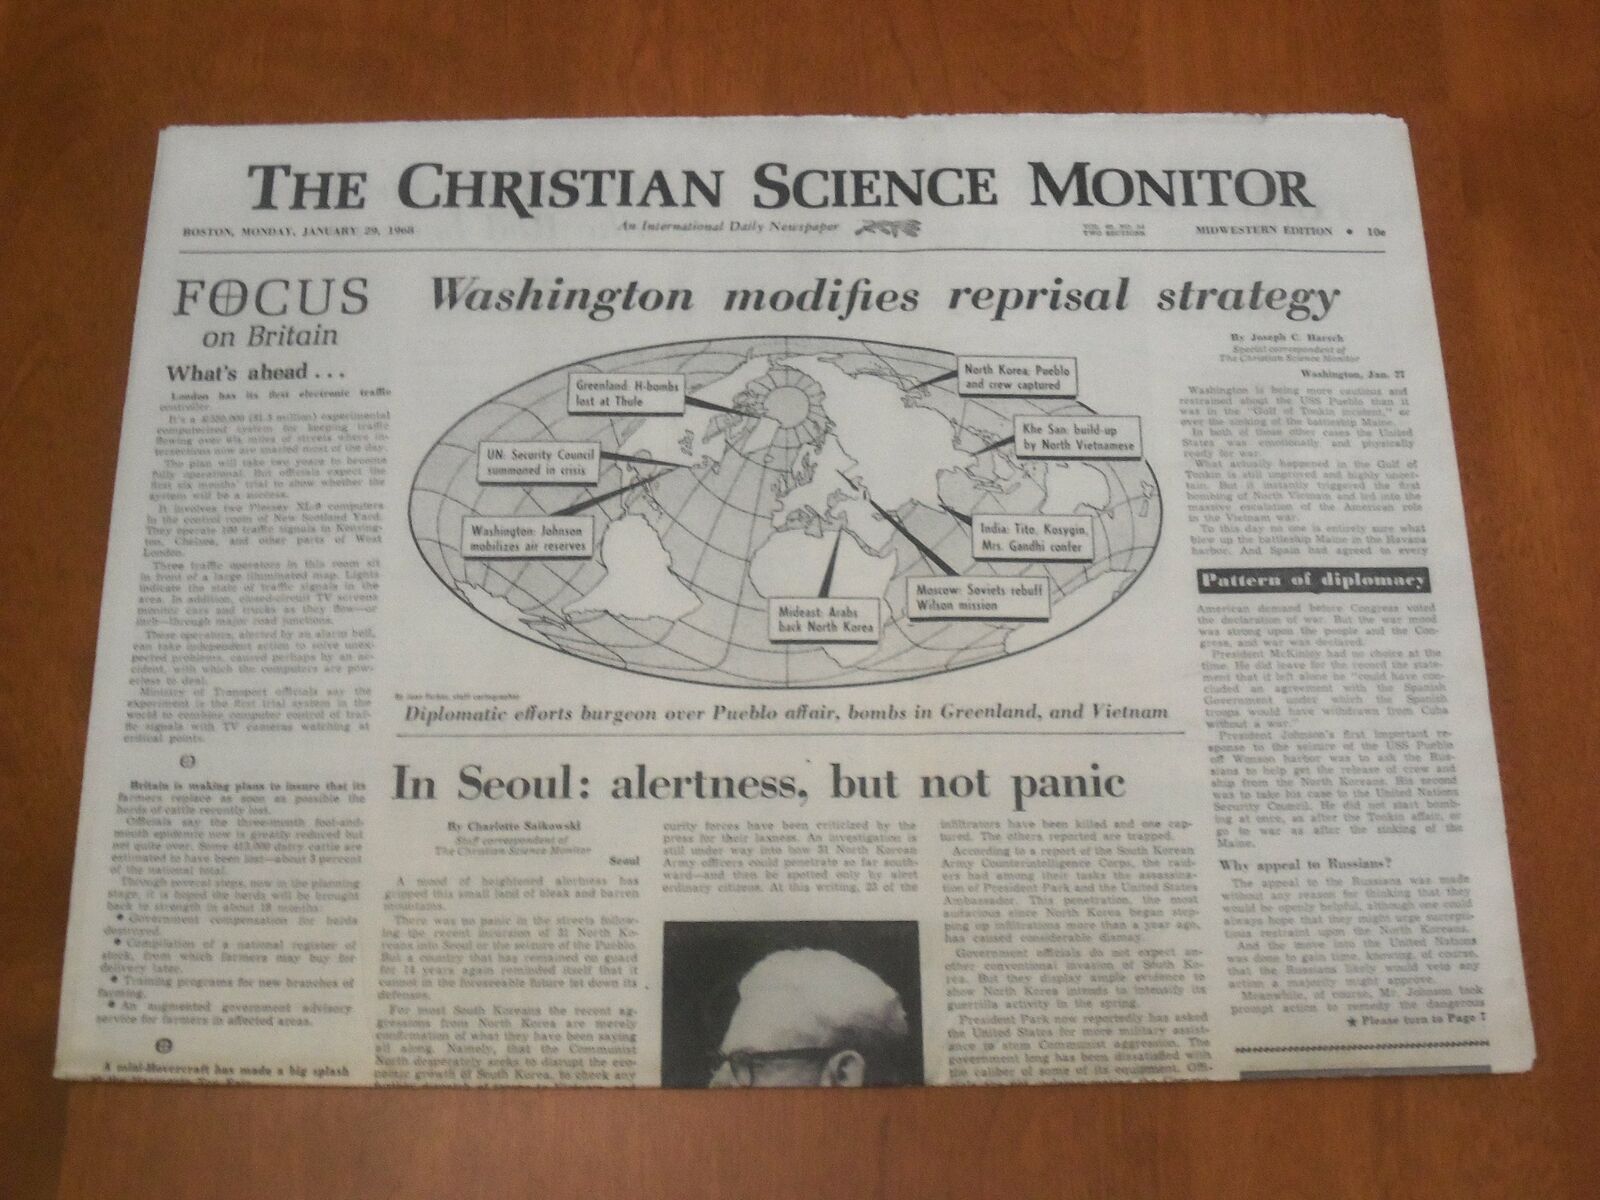 1968 JAN 29 THE CHRISTIAN SCIENCE MONITOR -WASHINGTON MODIFIES STRATEGY- NP 4637